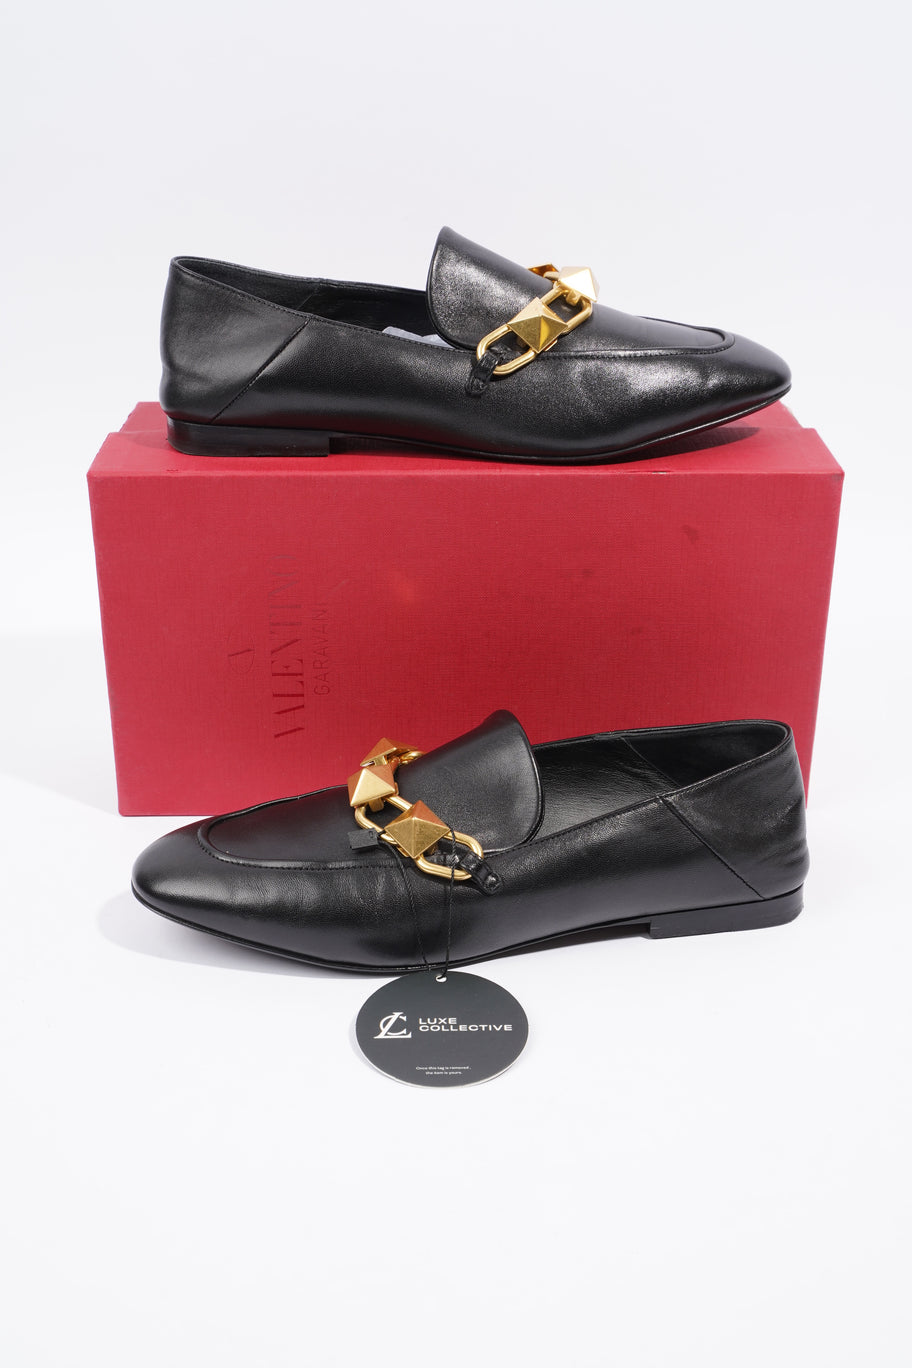 Roman Stud Loafers Black Leather EU 38 UK 5 Image 9